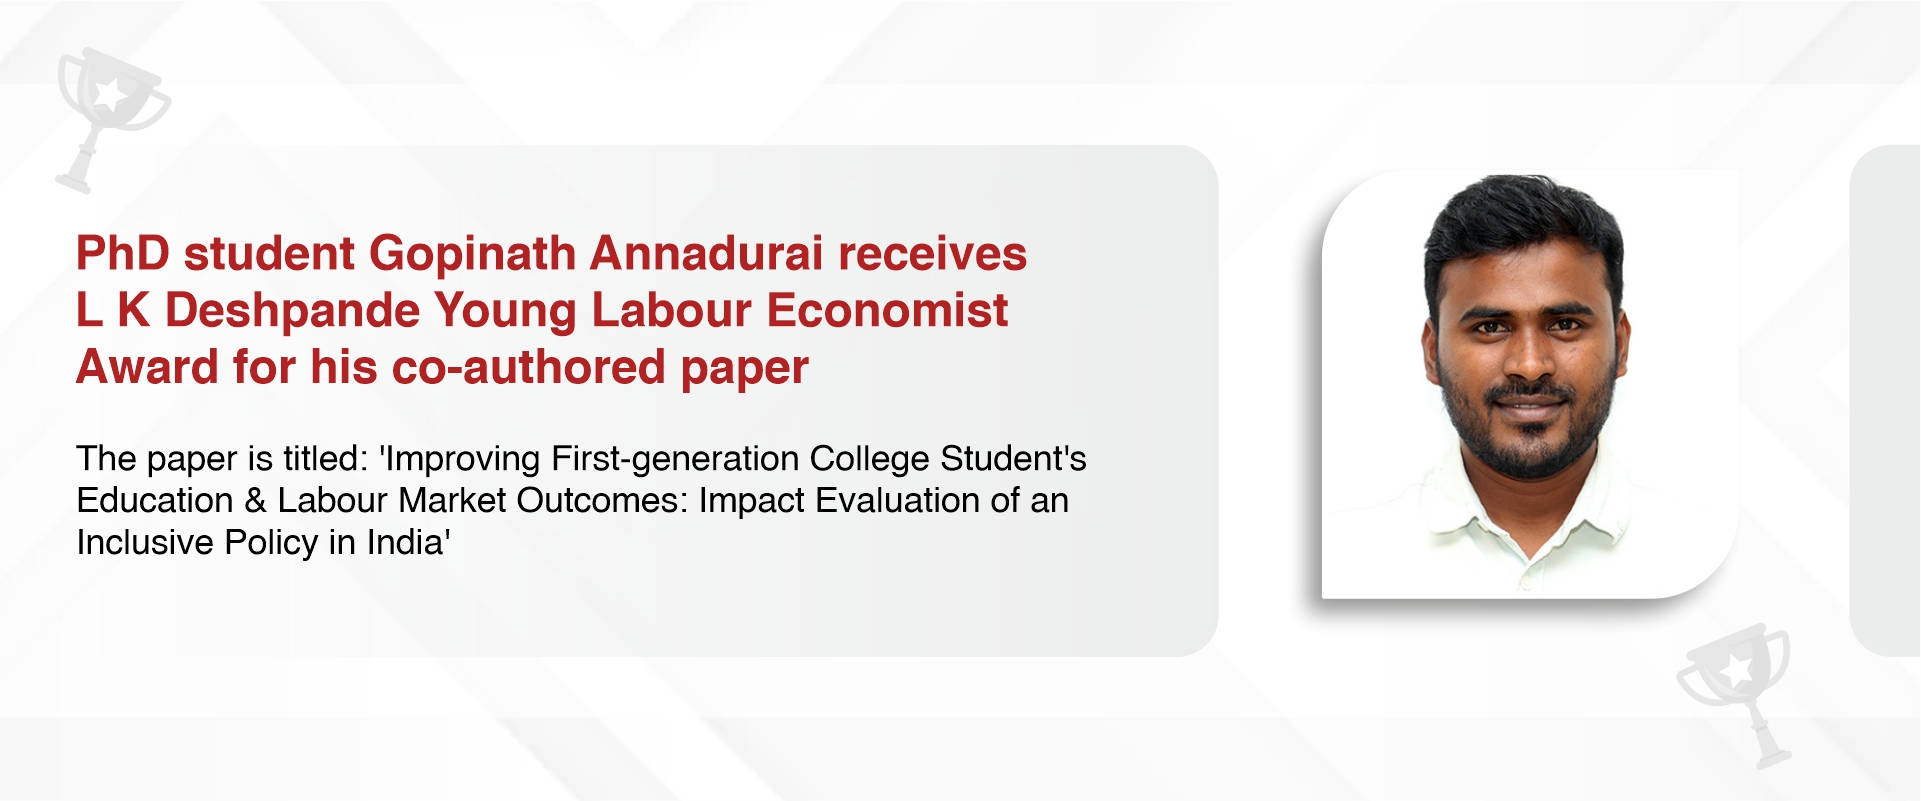 PhD student Gopinath Annadurai receives L K Deshpande Young Labour Economist Award for his co-authored paper 